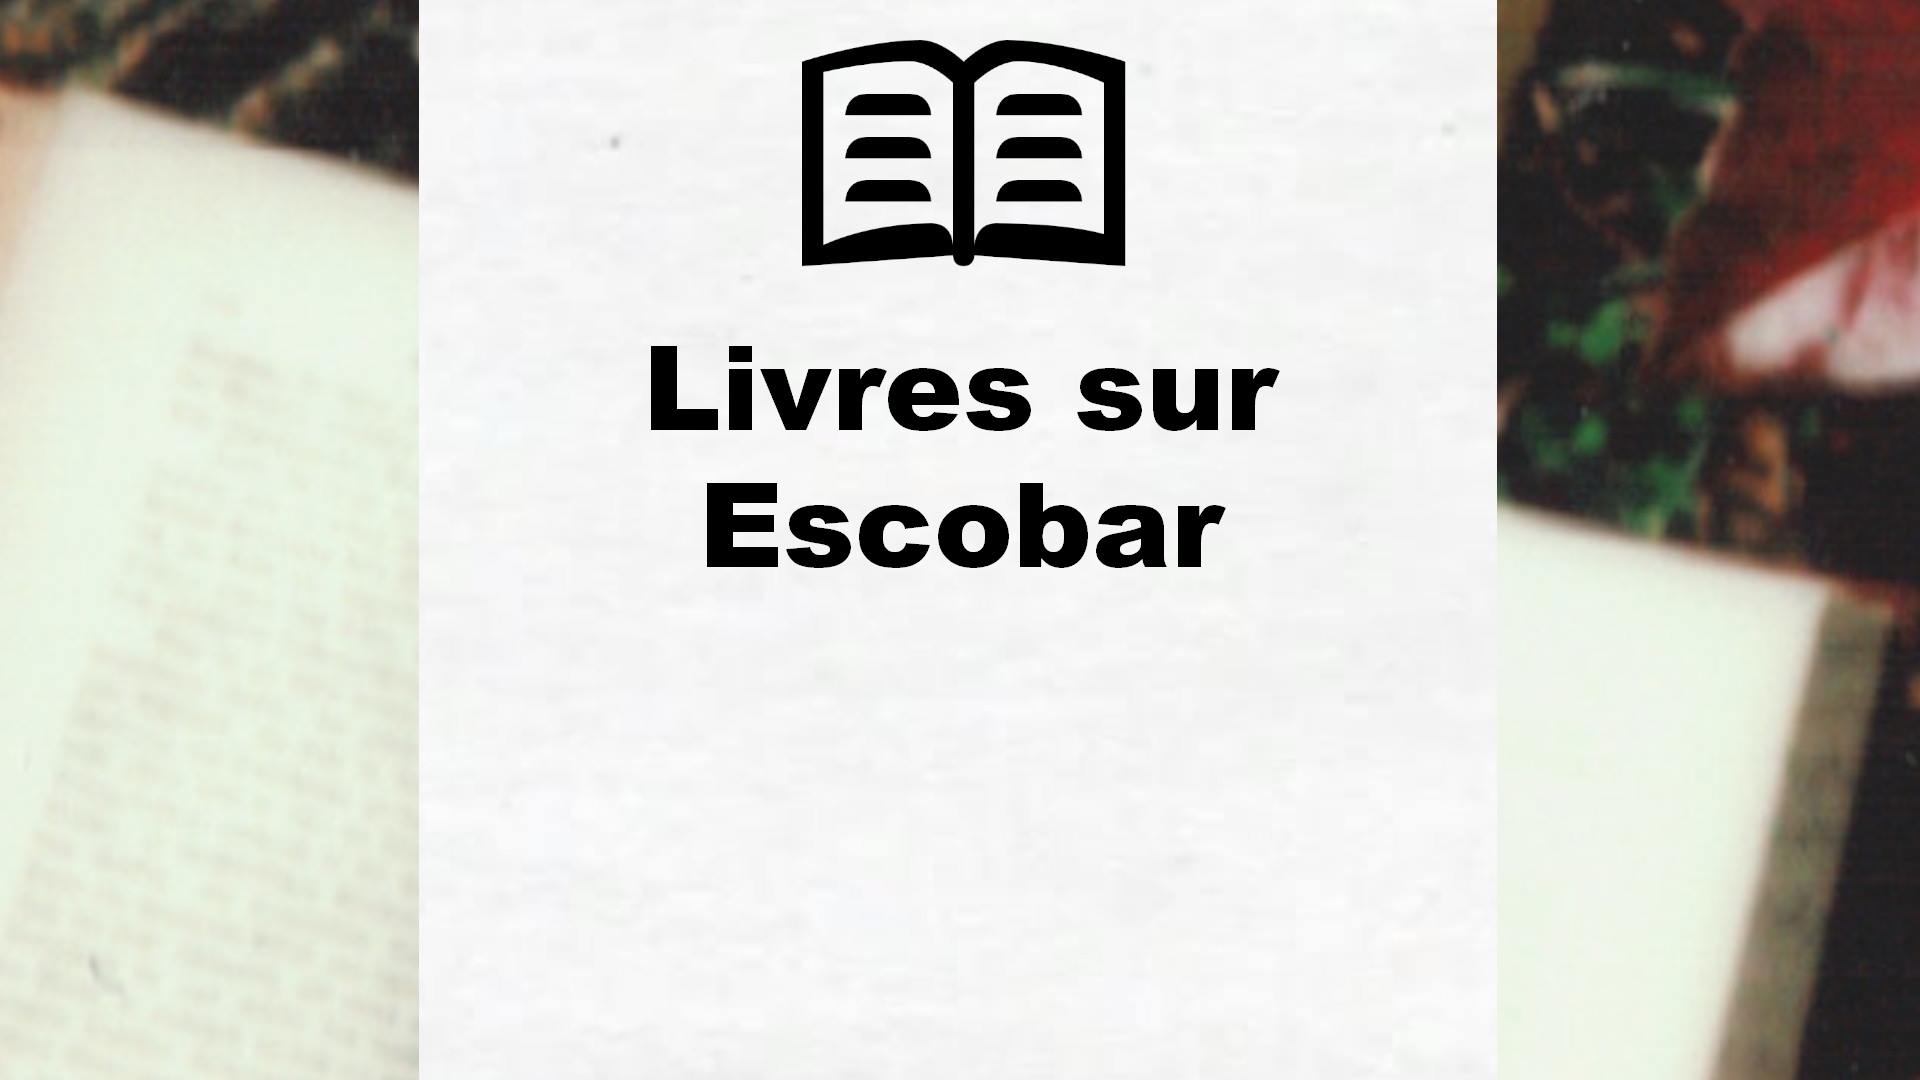 Livres sur Escobar